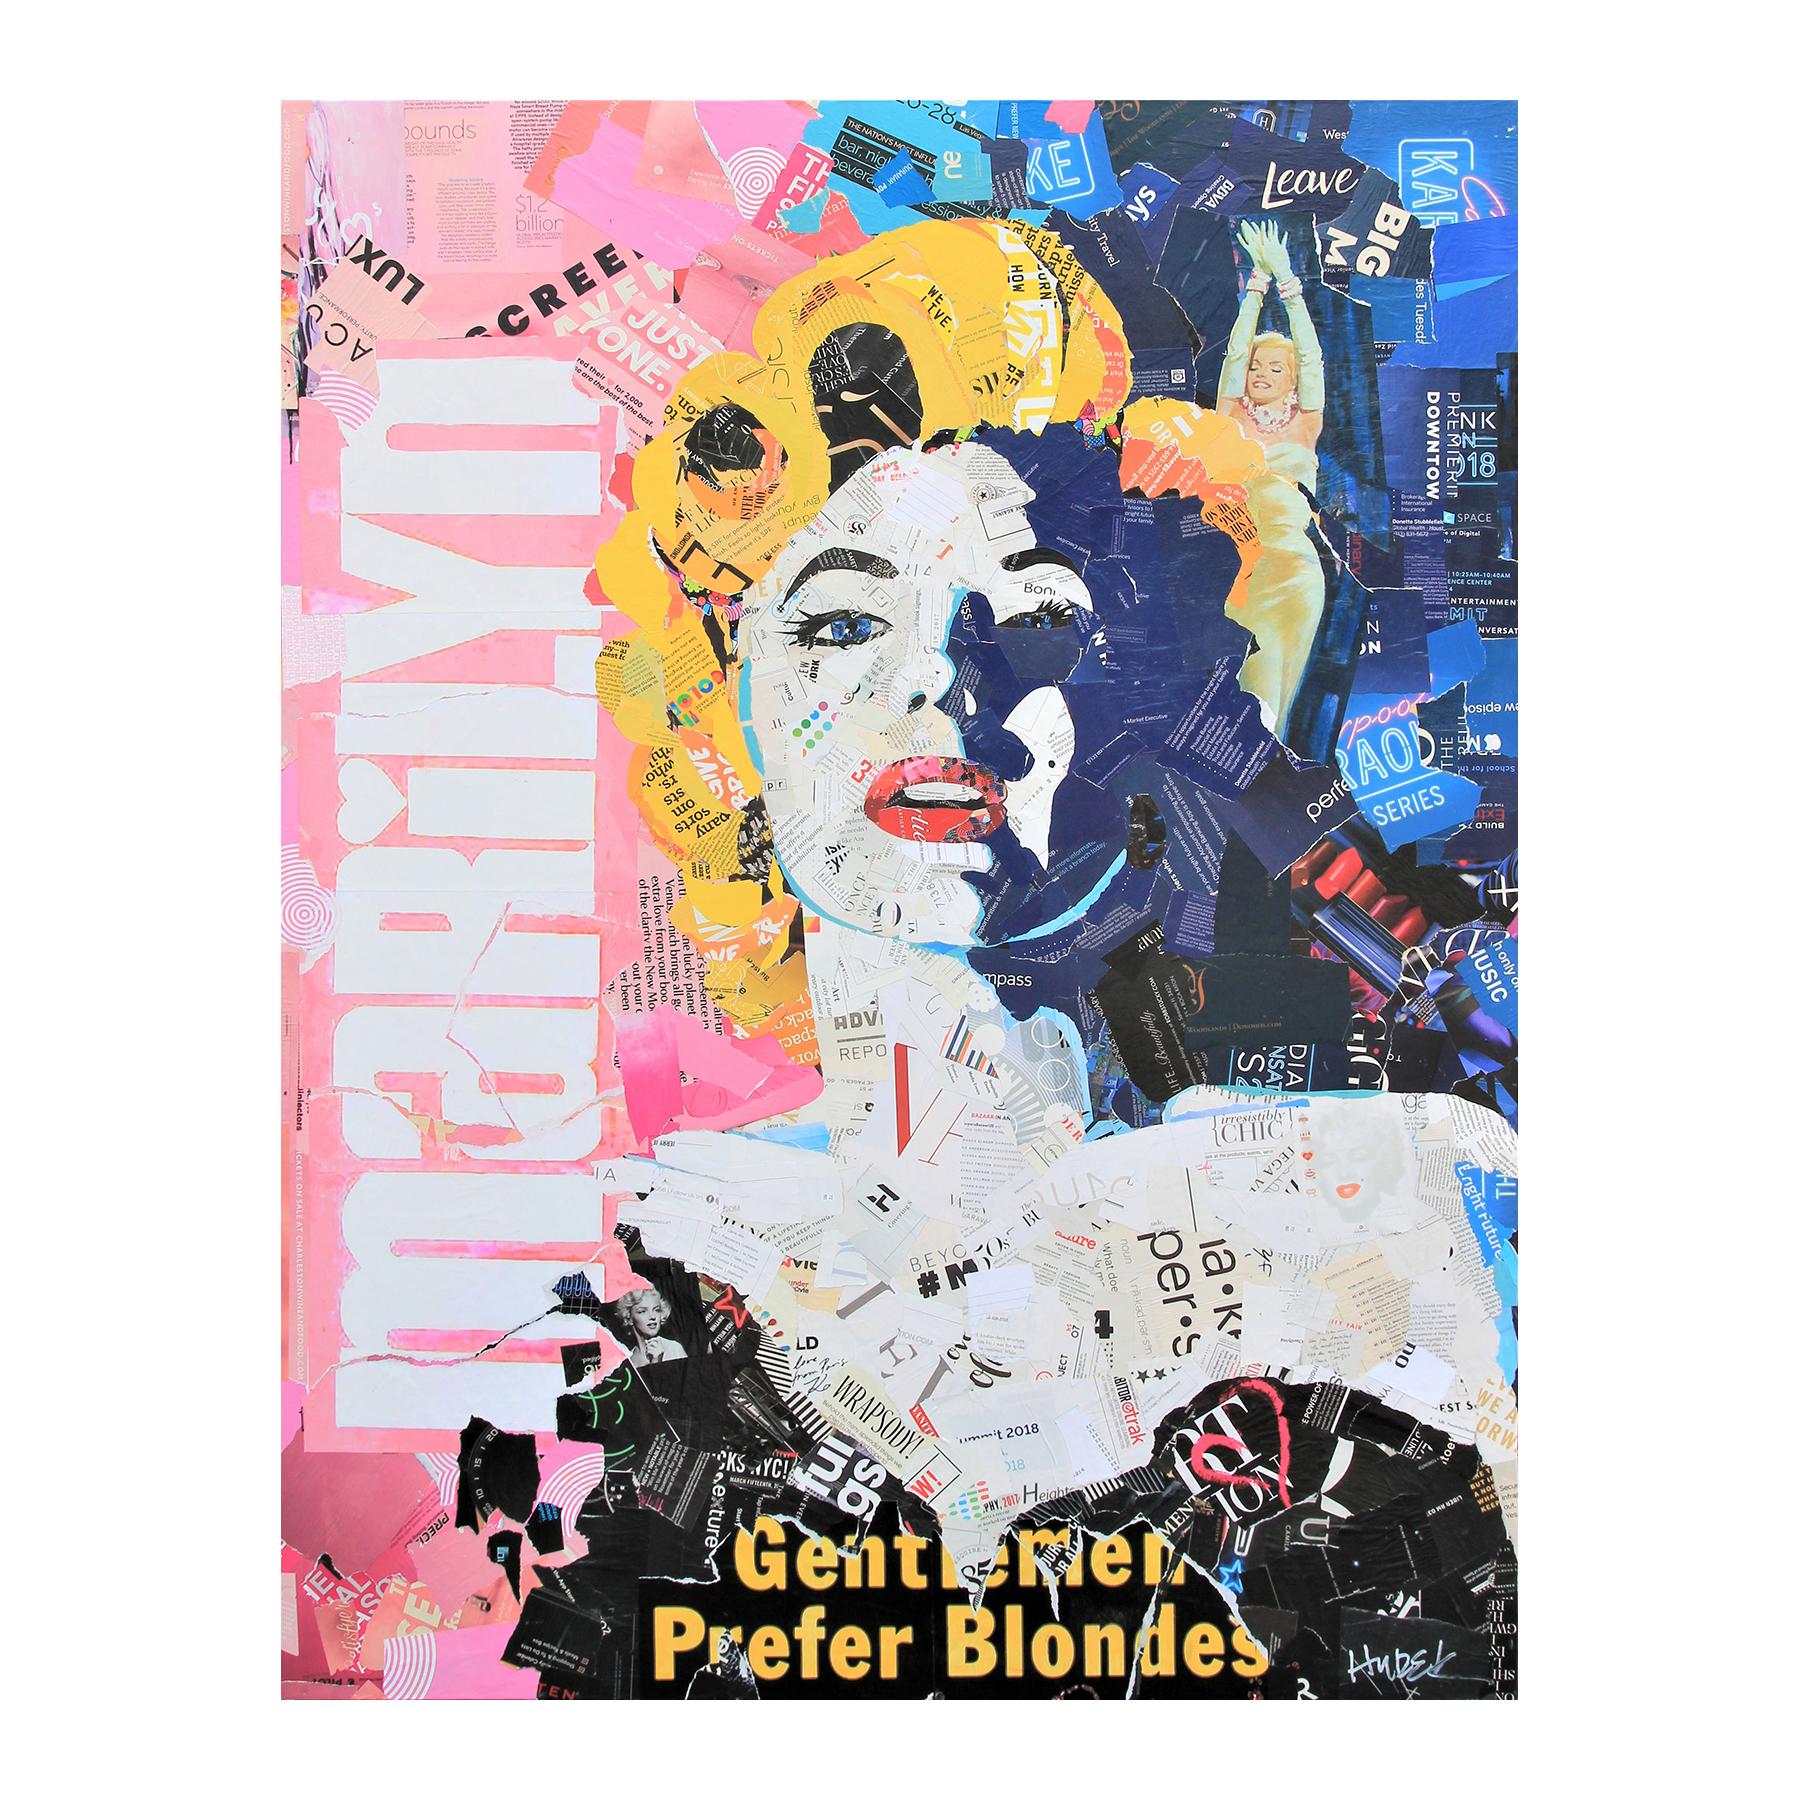 Jim Hudek Portrait Painting - "Gentlemen Prefer Blondes" Colorful Marilyn Monroe Pop Art Mixed Media Collage